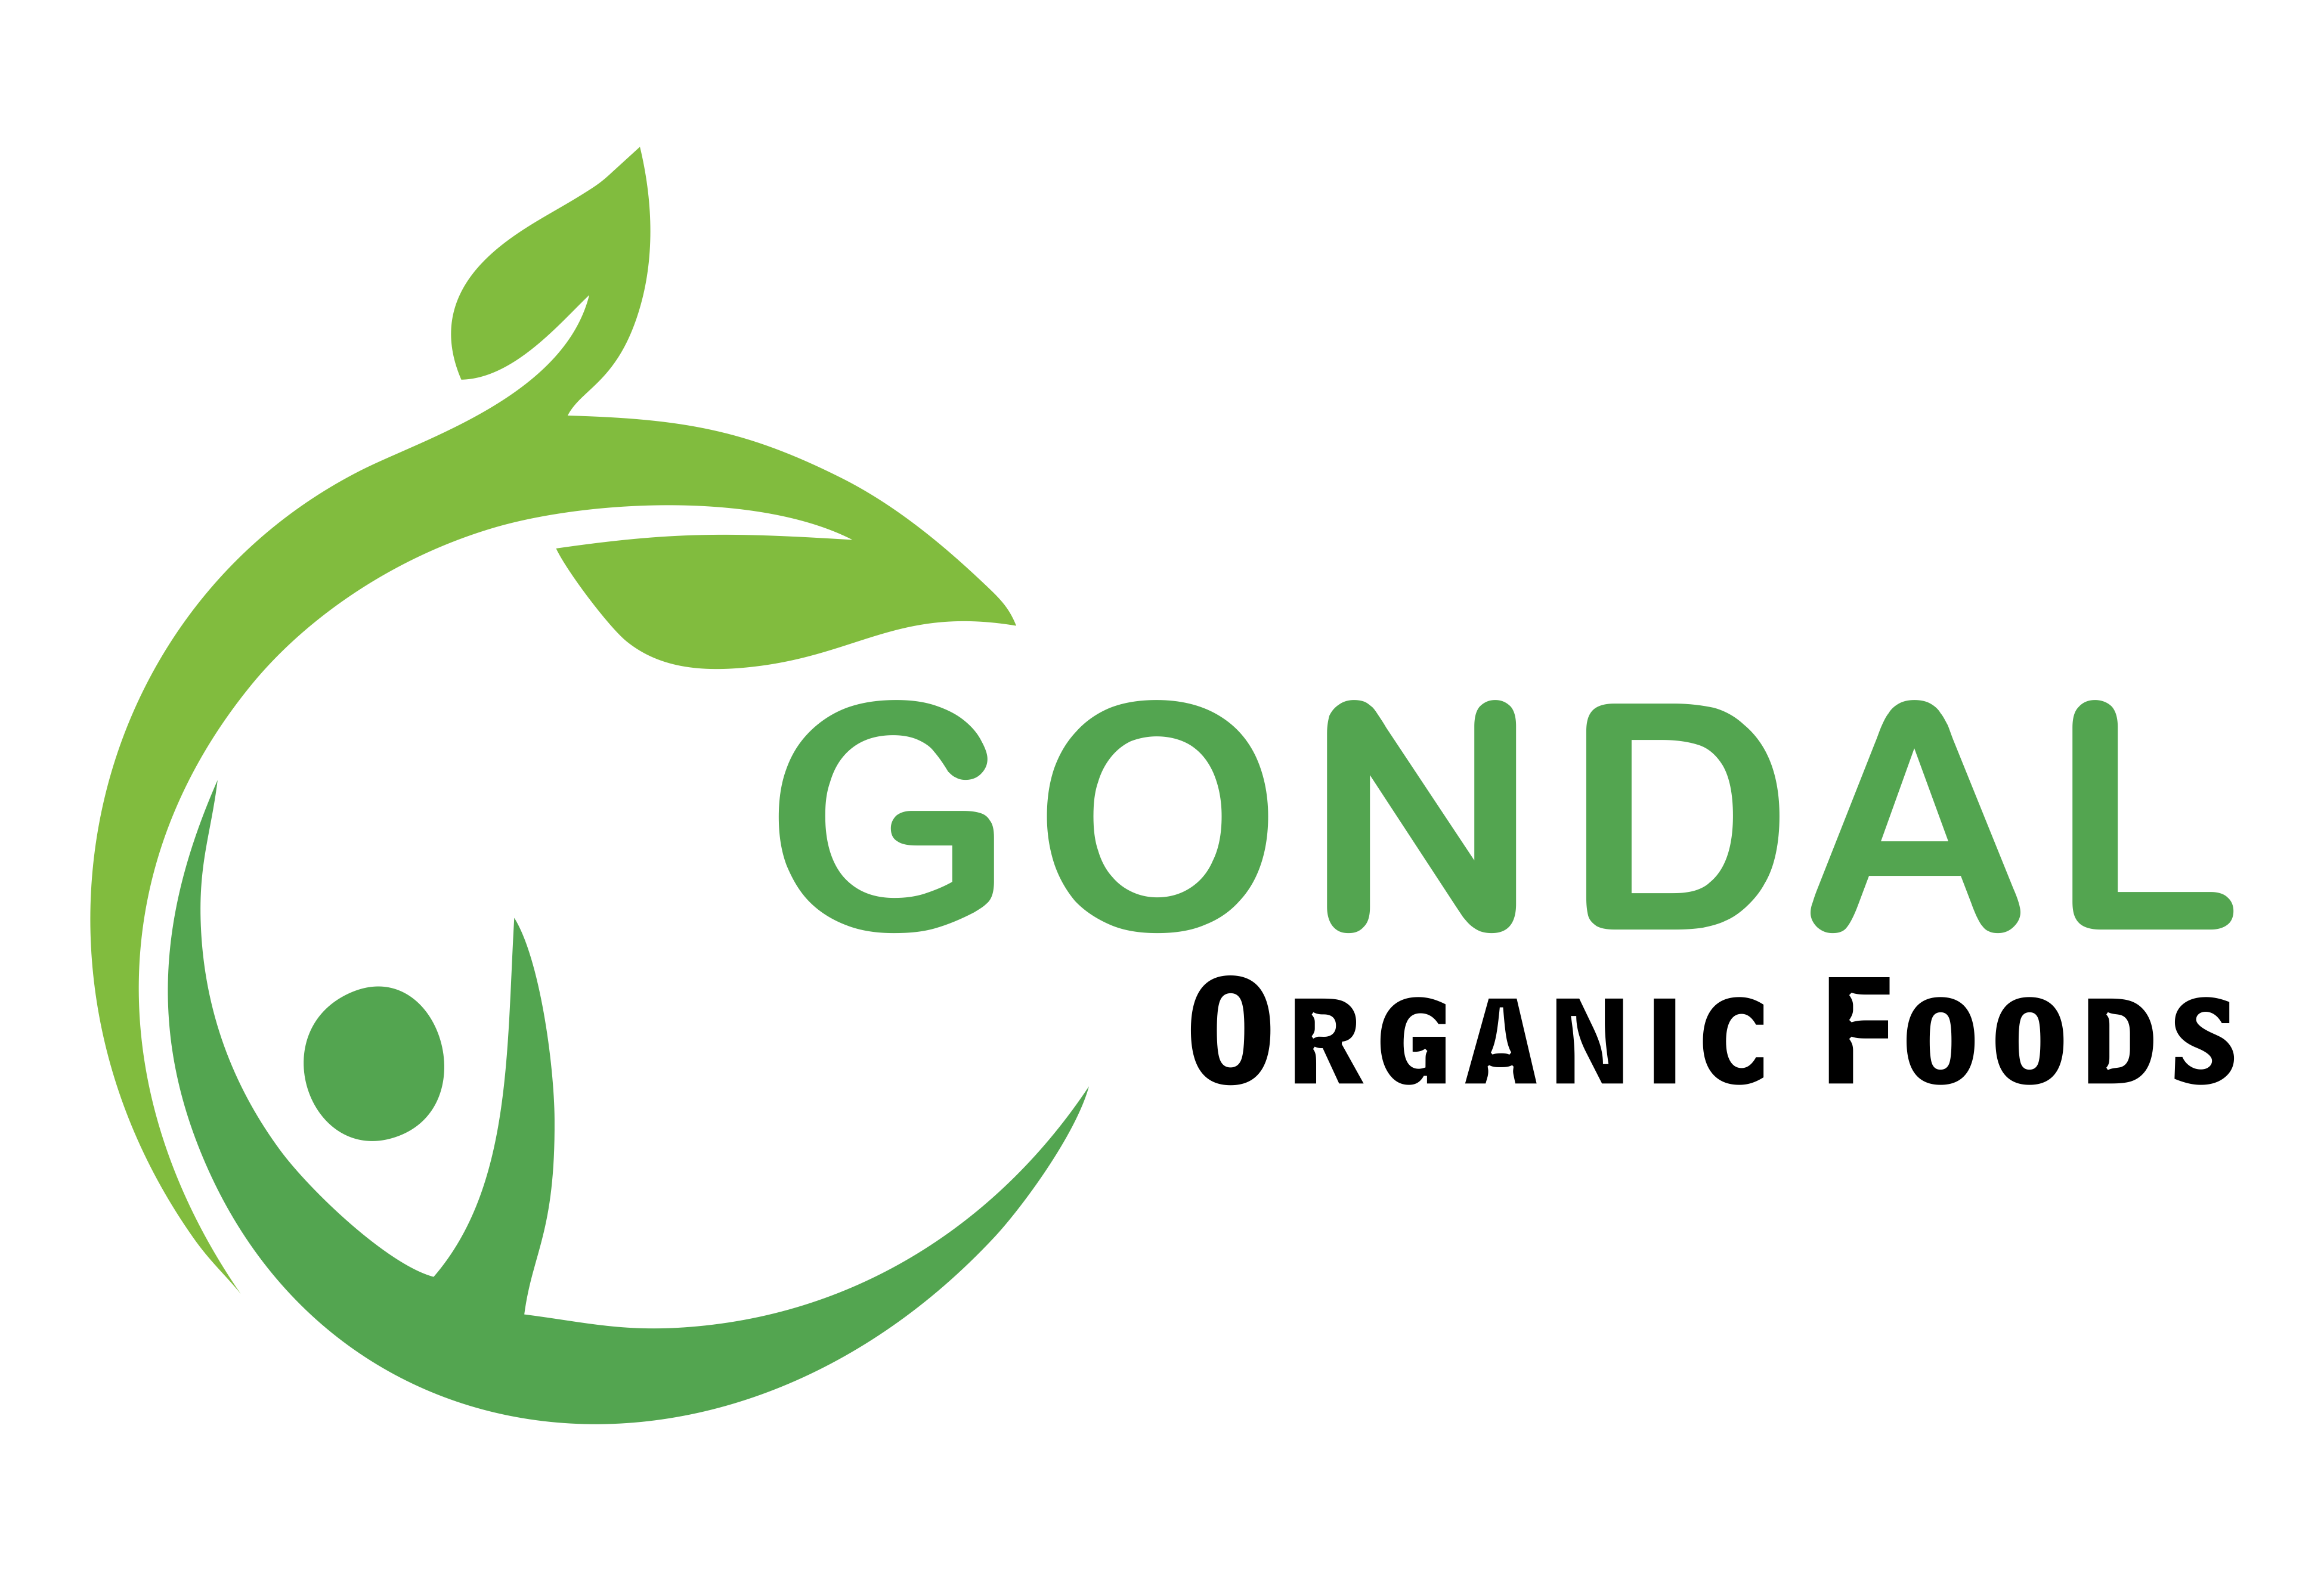 Gondal Organic Foods